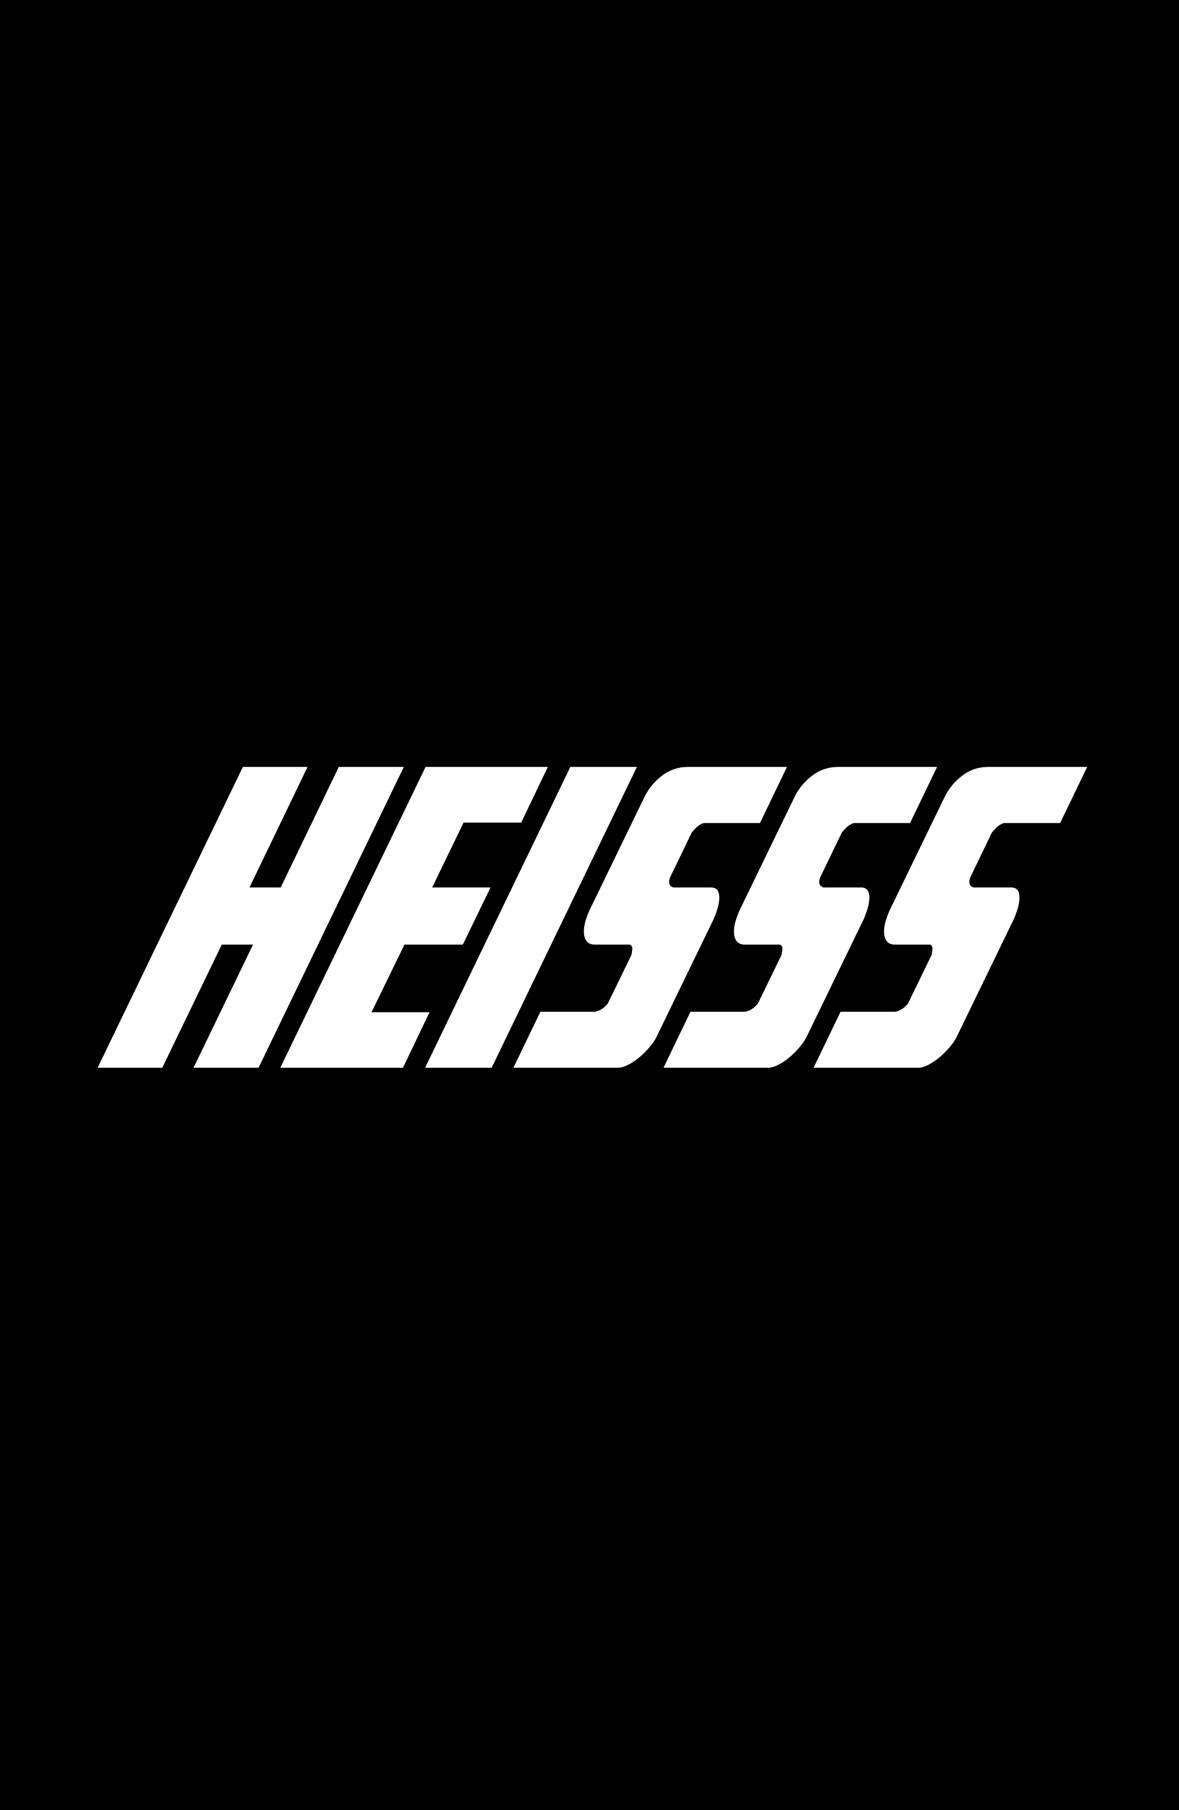 HEISSS VA001 I Release Event - Página frontal